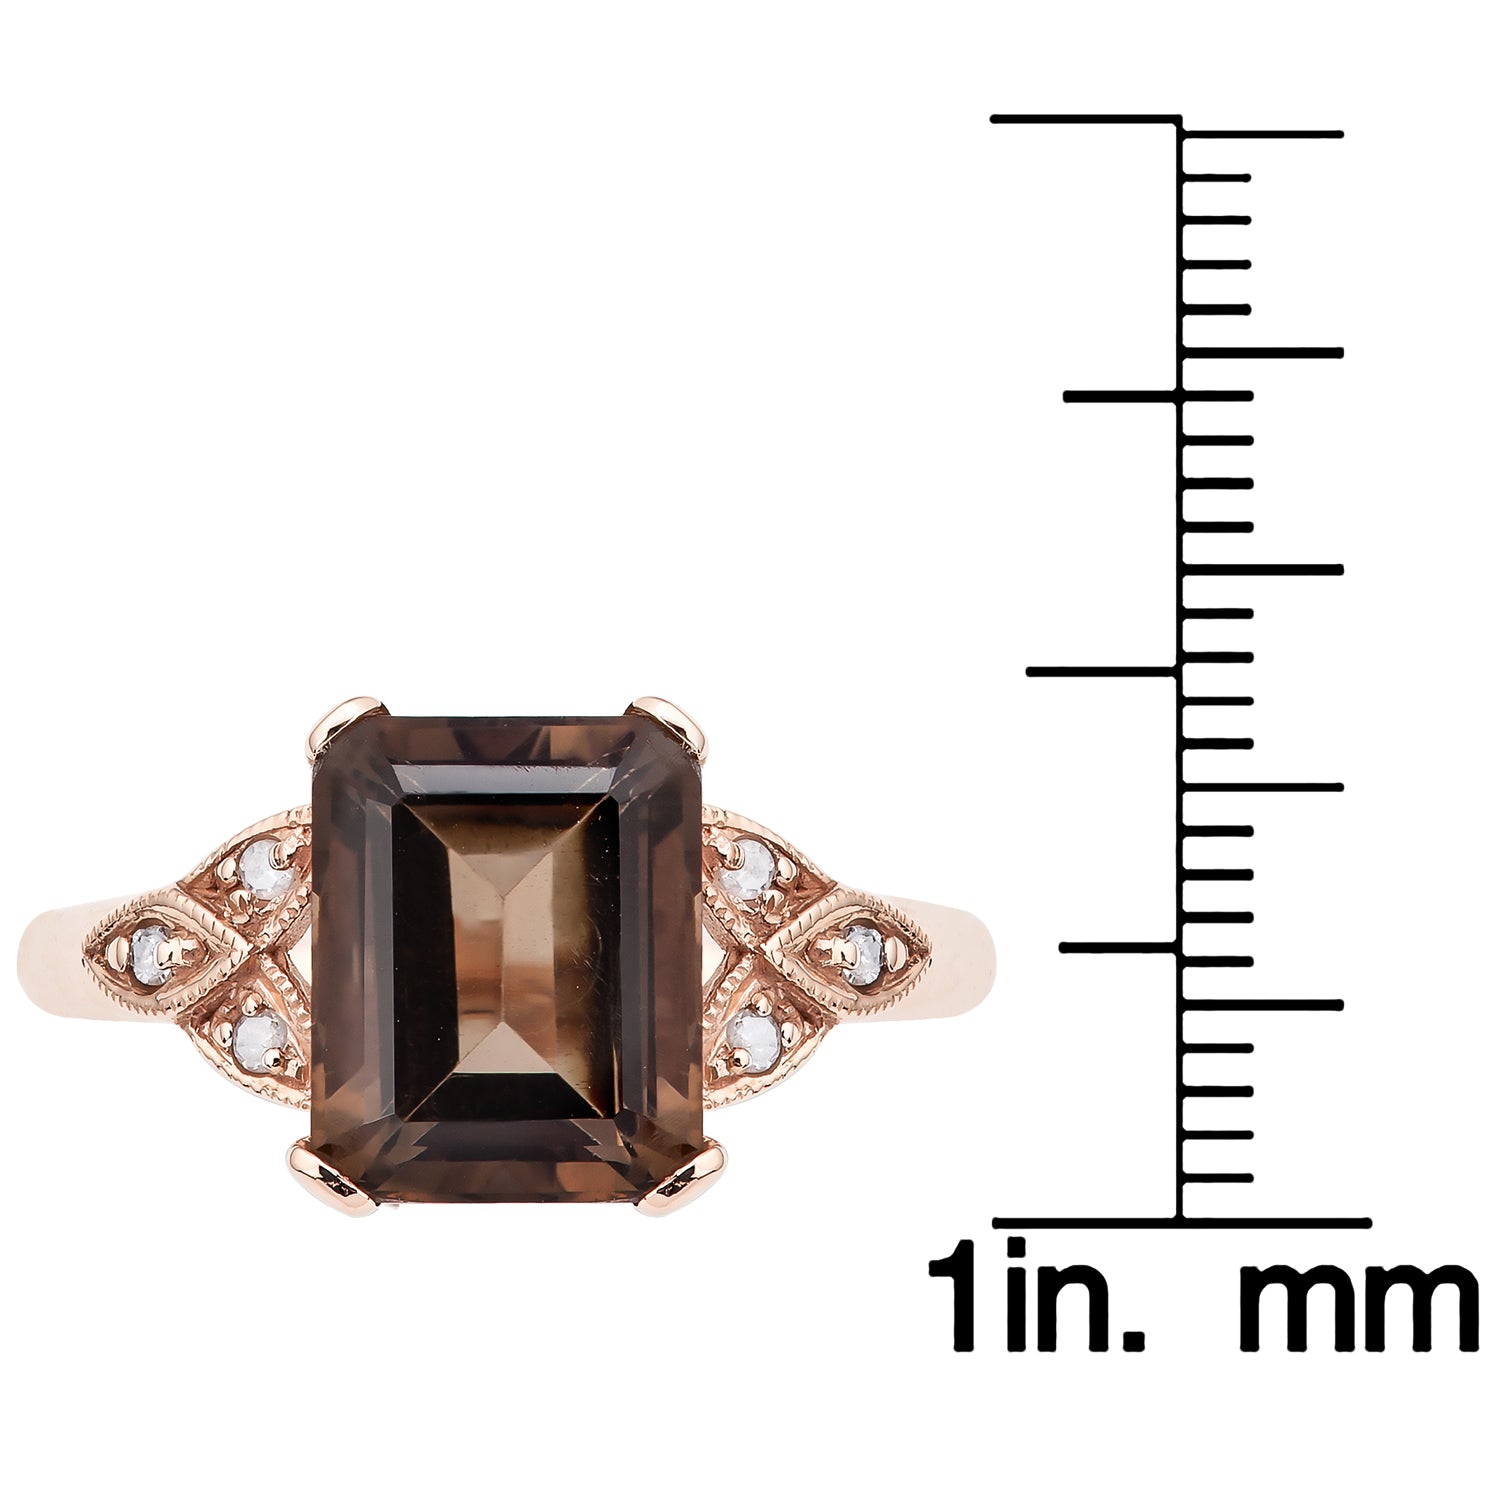 10k Rose Gold Vintage Style Genuine Emerald-cut Smoky Quartz and Diamond Ring